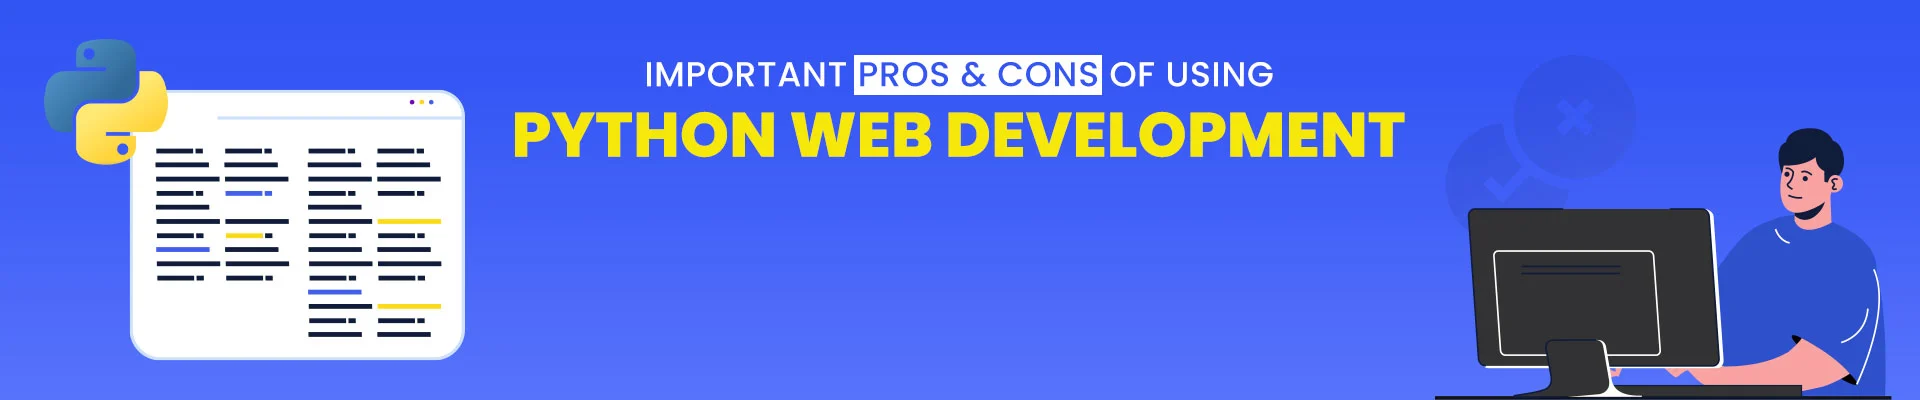 Pros & Cons of Using Python Web Development